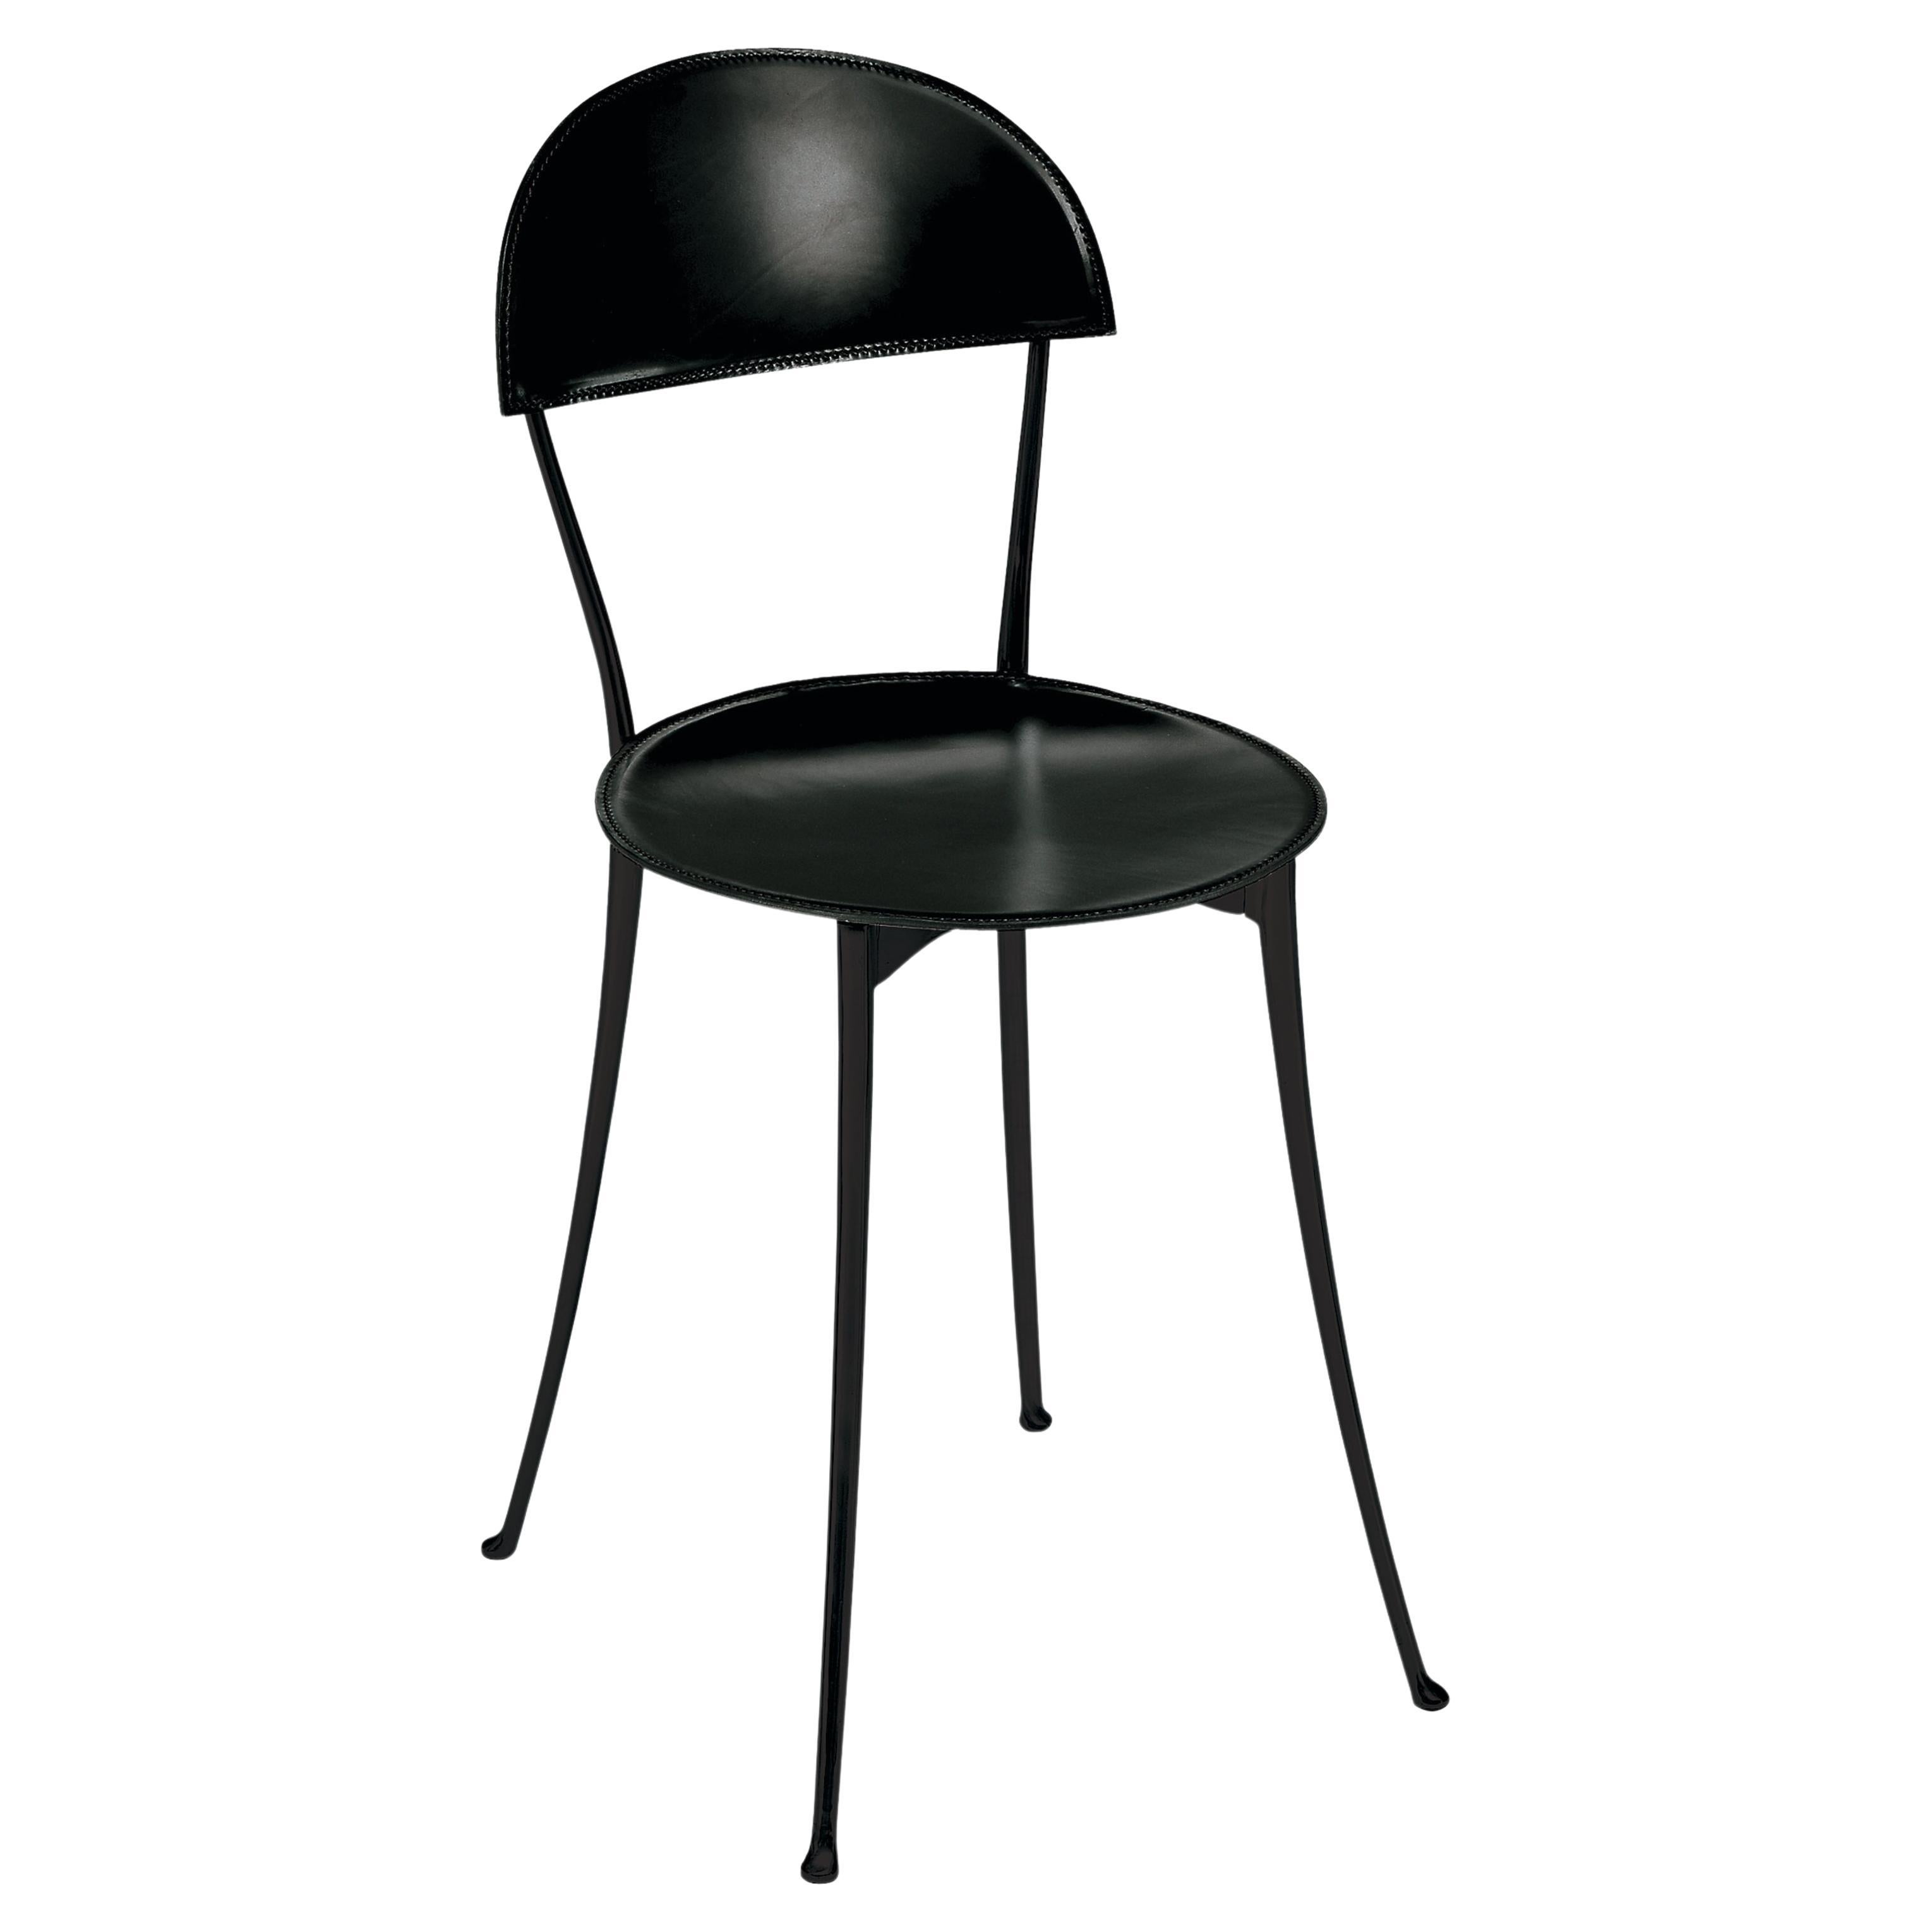 Zanotta Tonietta Chair in Polypropylene with Black Aluminum Frame by Enzo Mari